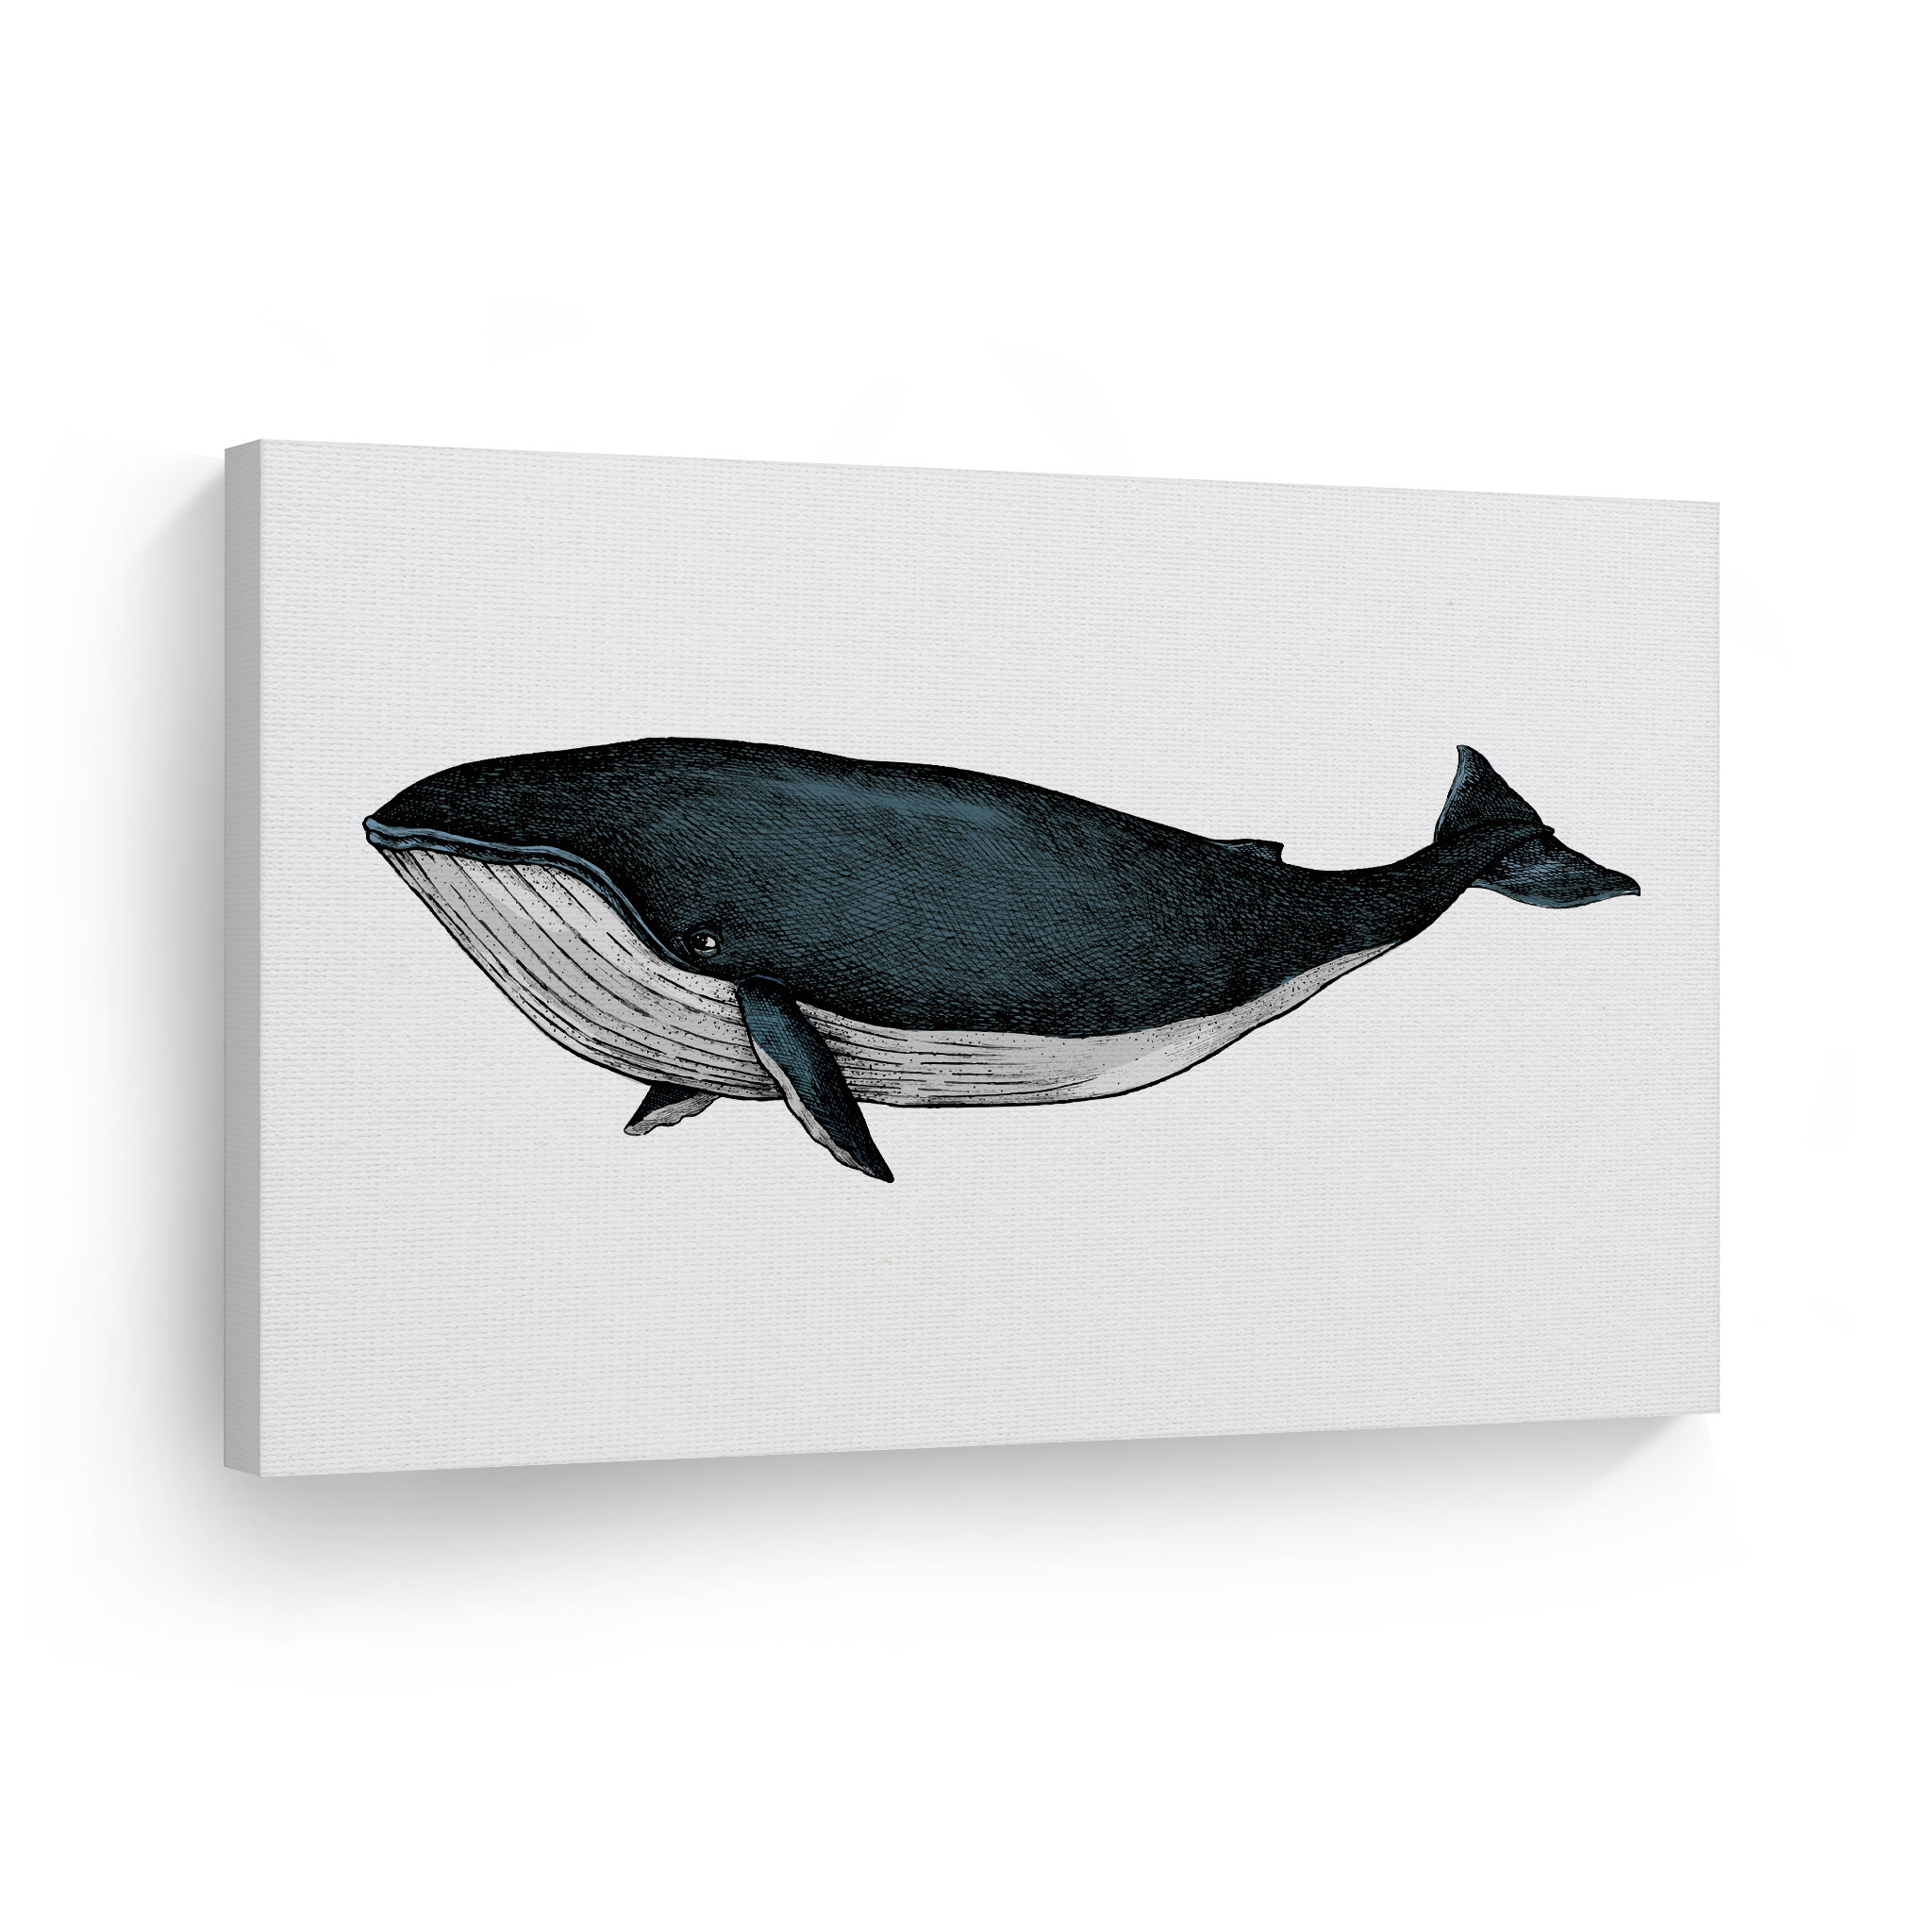 SeaLife Ocean Prints A5A4A3 Whales print Whales Art Print | Nursery Wall Decor Kids Decor Whales Nursery Types of Whales art